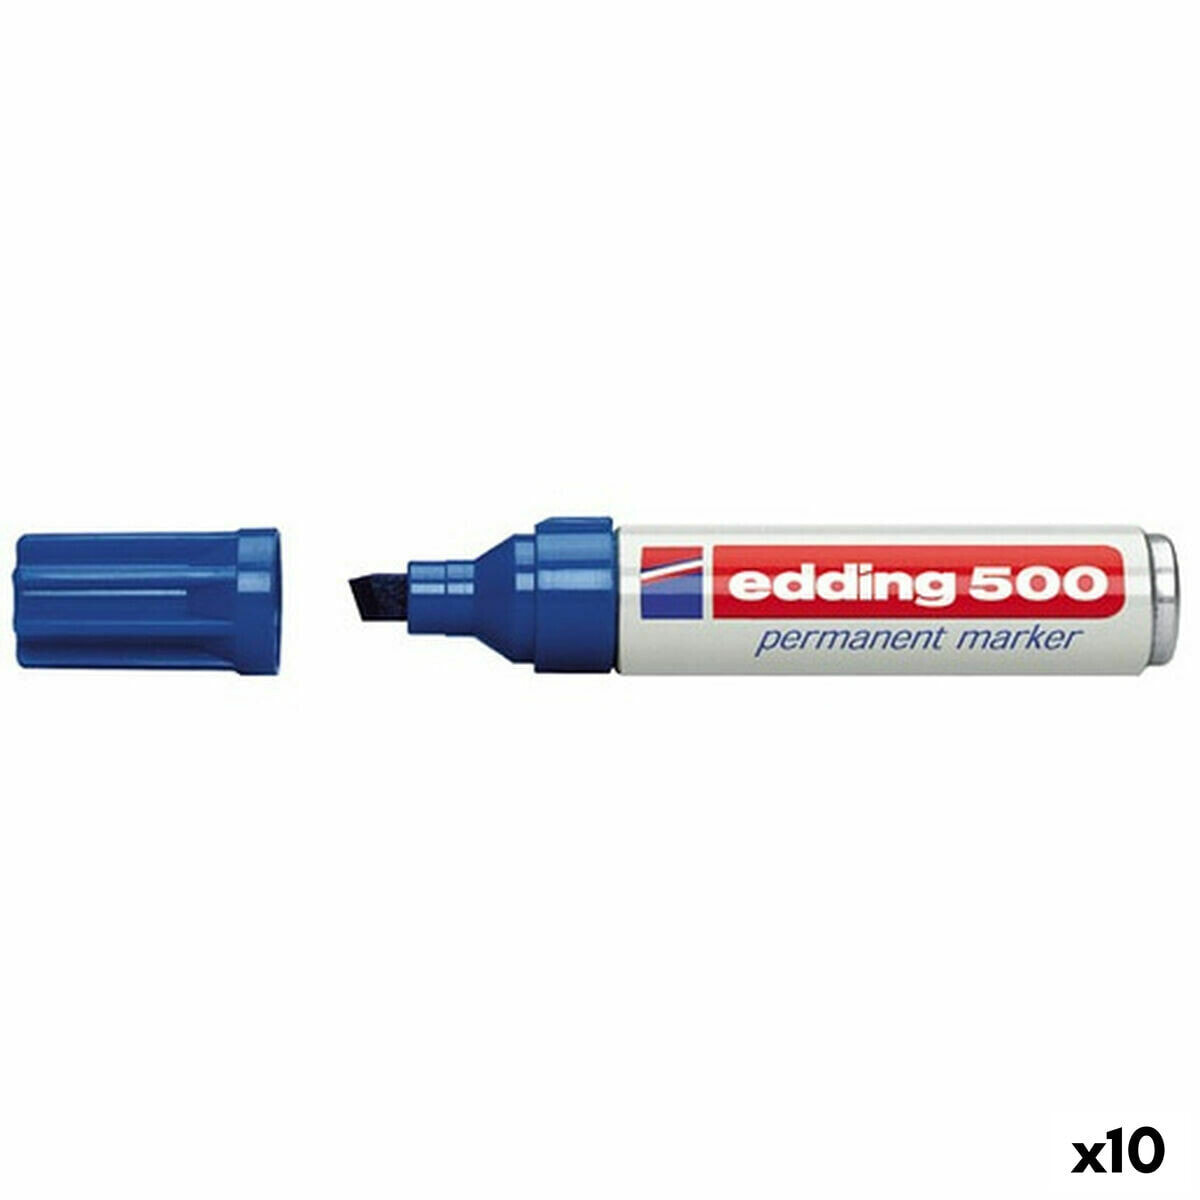 Permanent marker Edding 500 Blue (10 Units)